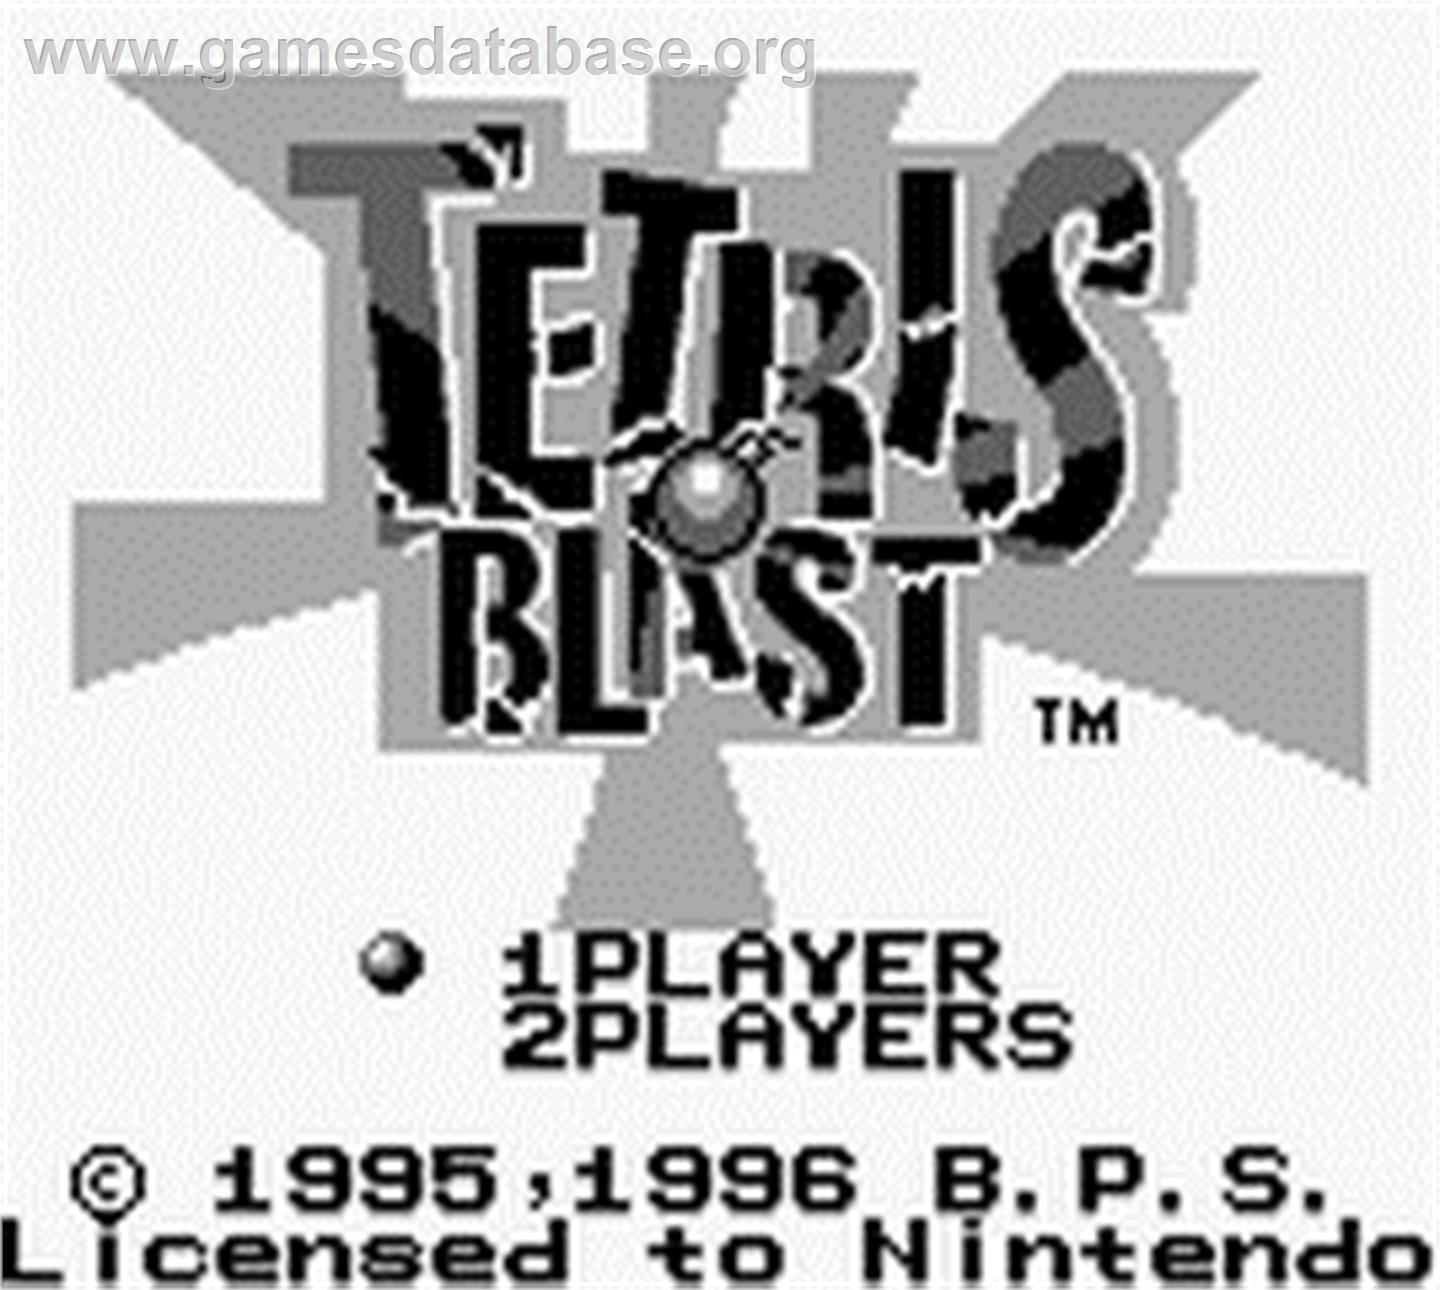 Tetris Blast - Nintendo Game Boy - Artwork - Title Screen